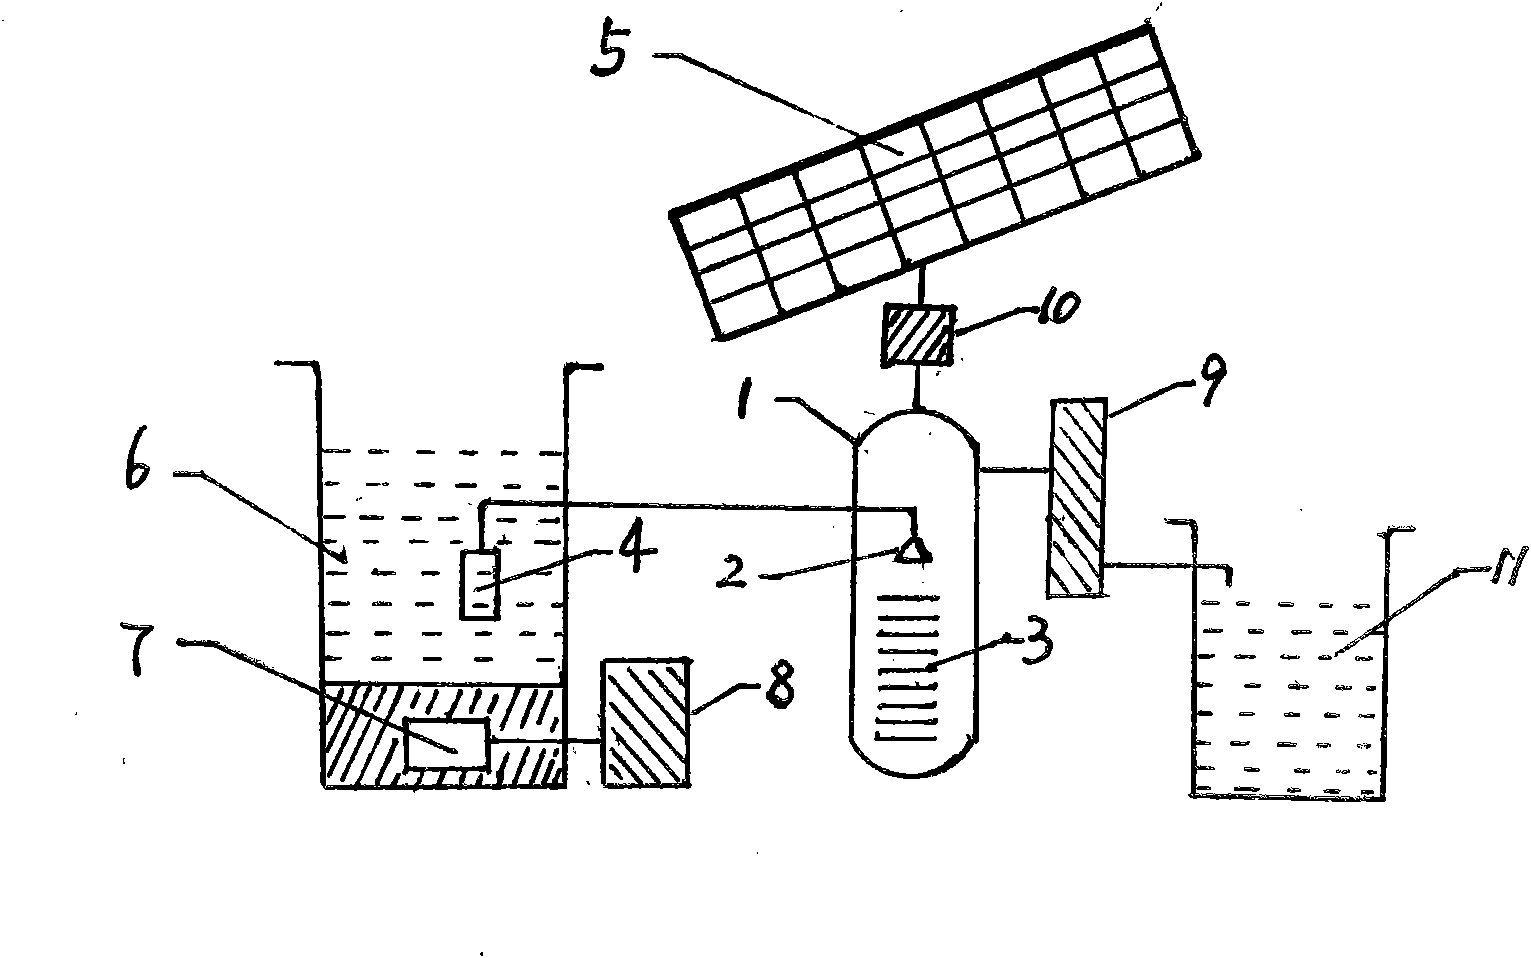 Solar sewage treatment device